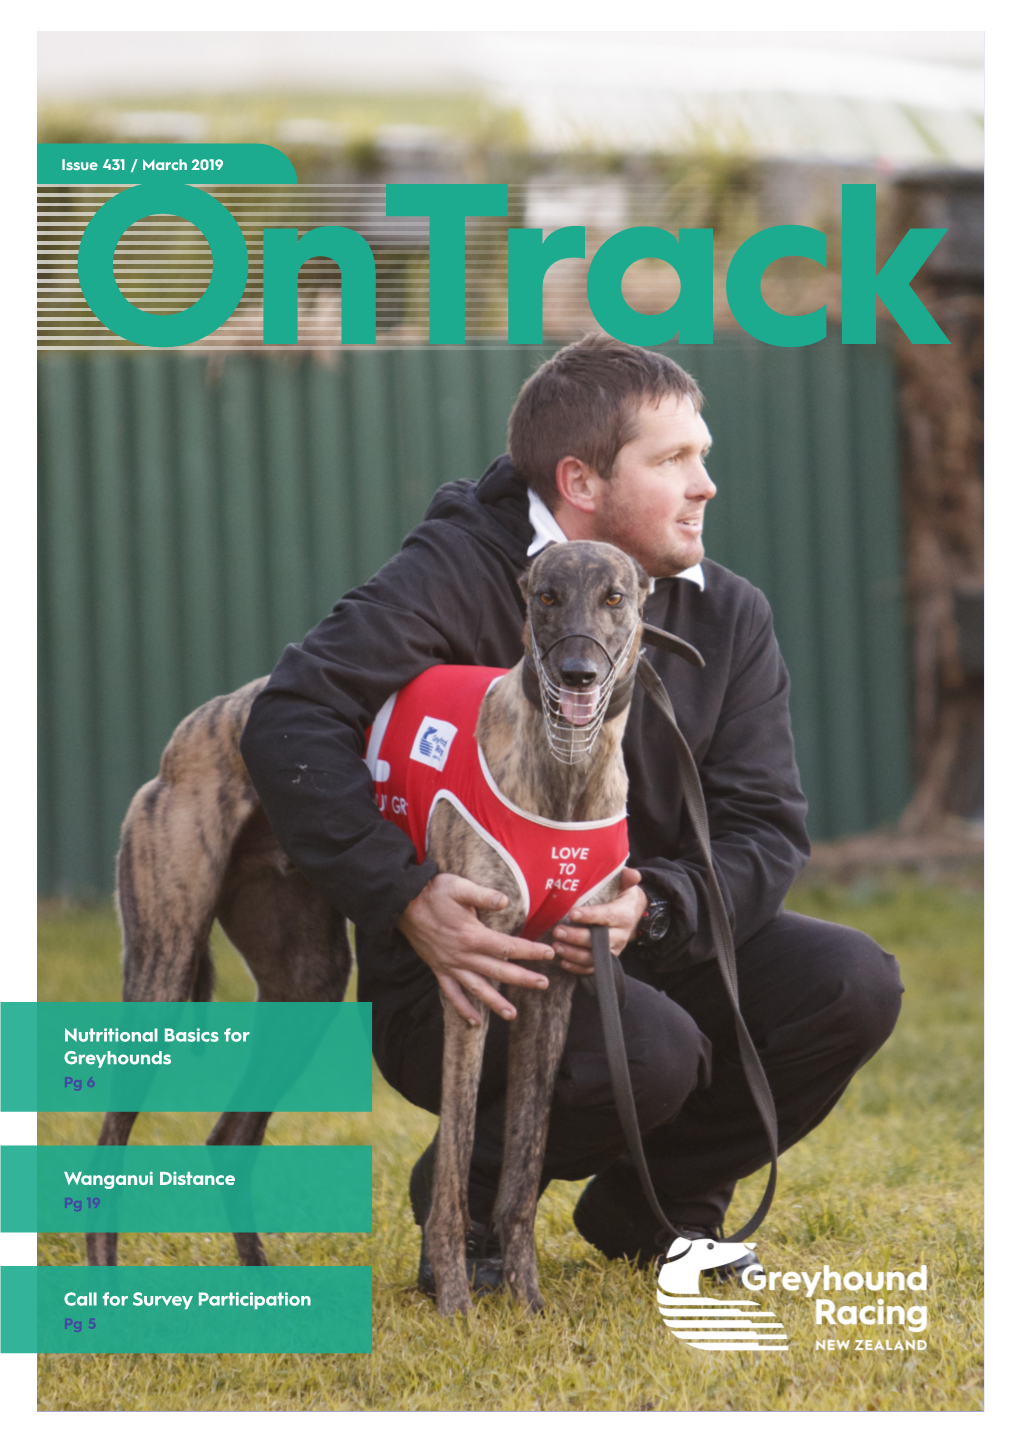 Wanganui Distance Nutritional Basics for Greyhounds Call for Survey